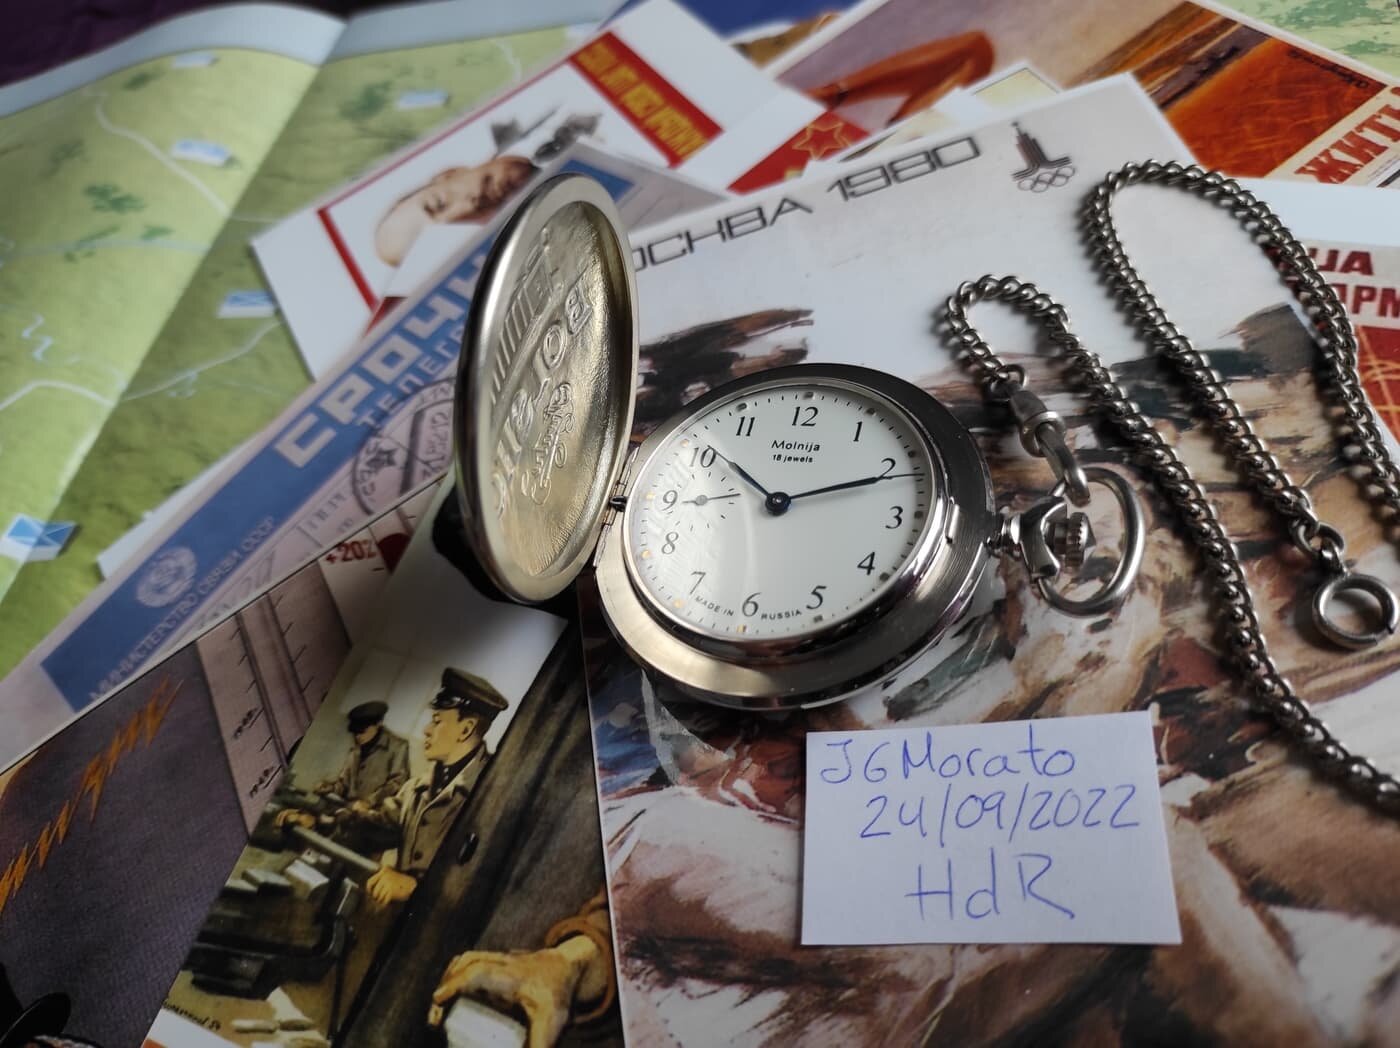 ruso bolsillo Molnija - Mercado de relojes - HdR